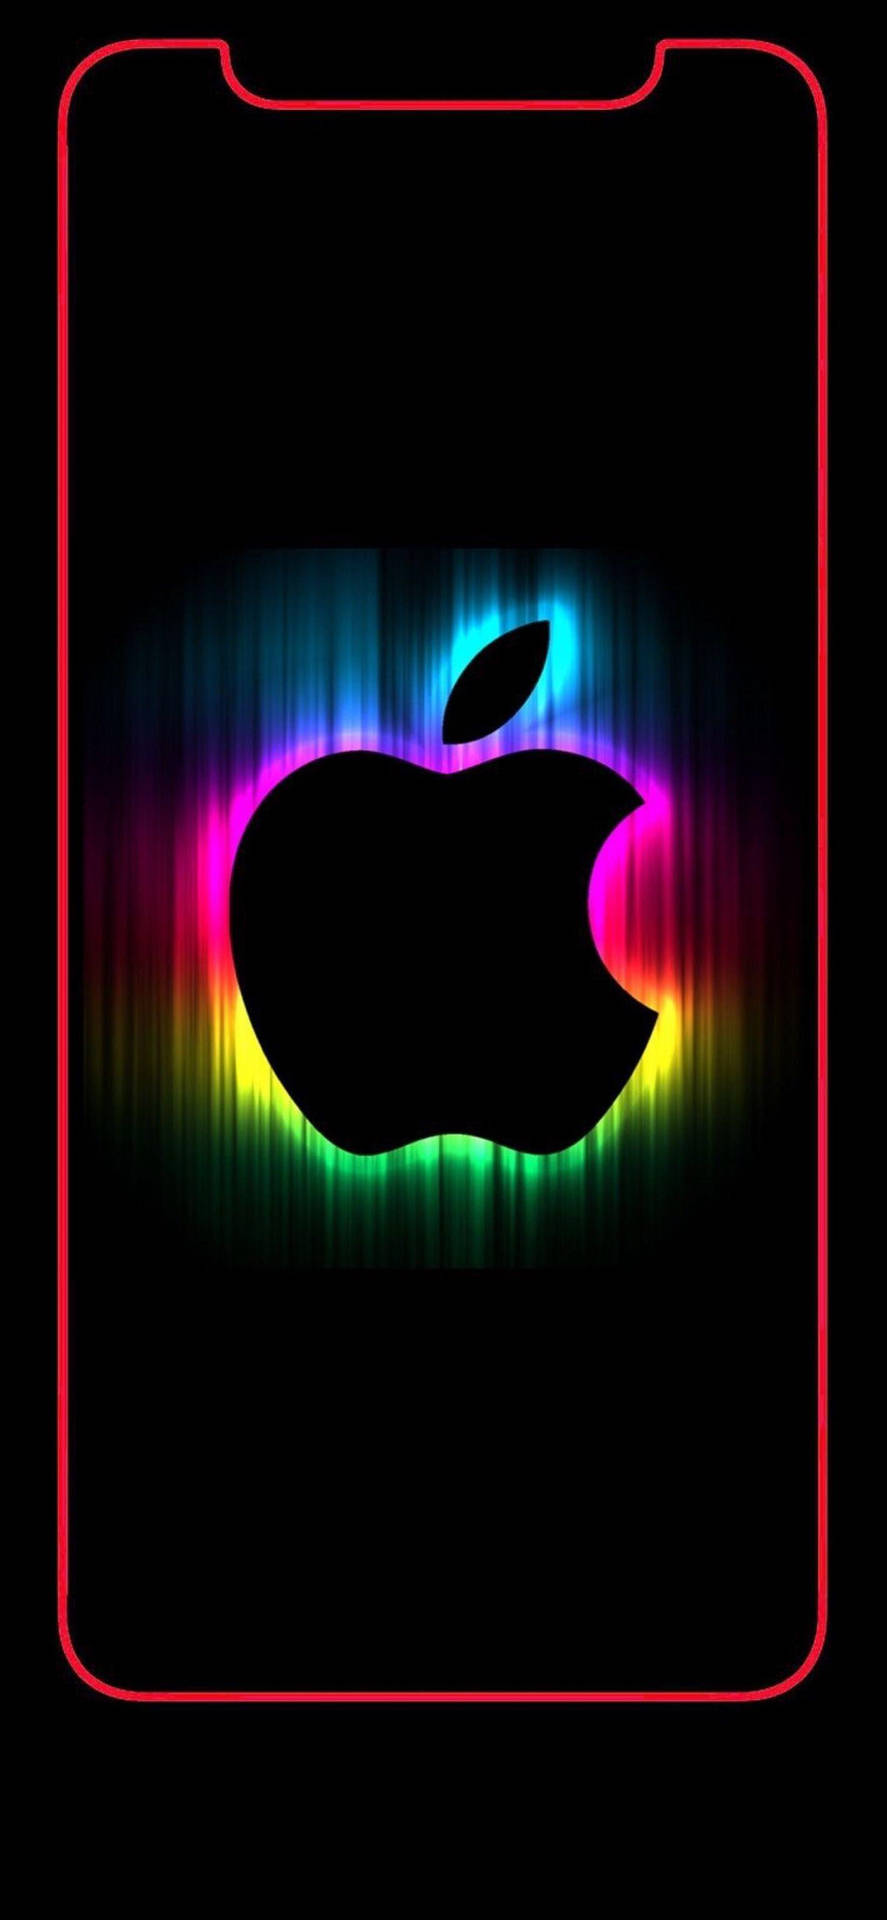 Download Red Outline Apple Screen Wallpaper | Wallpapers.com